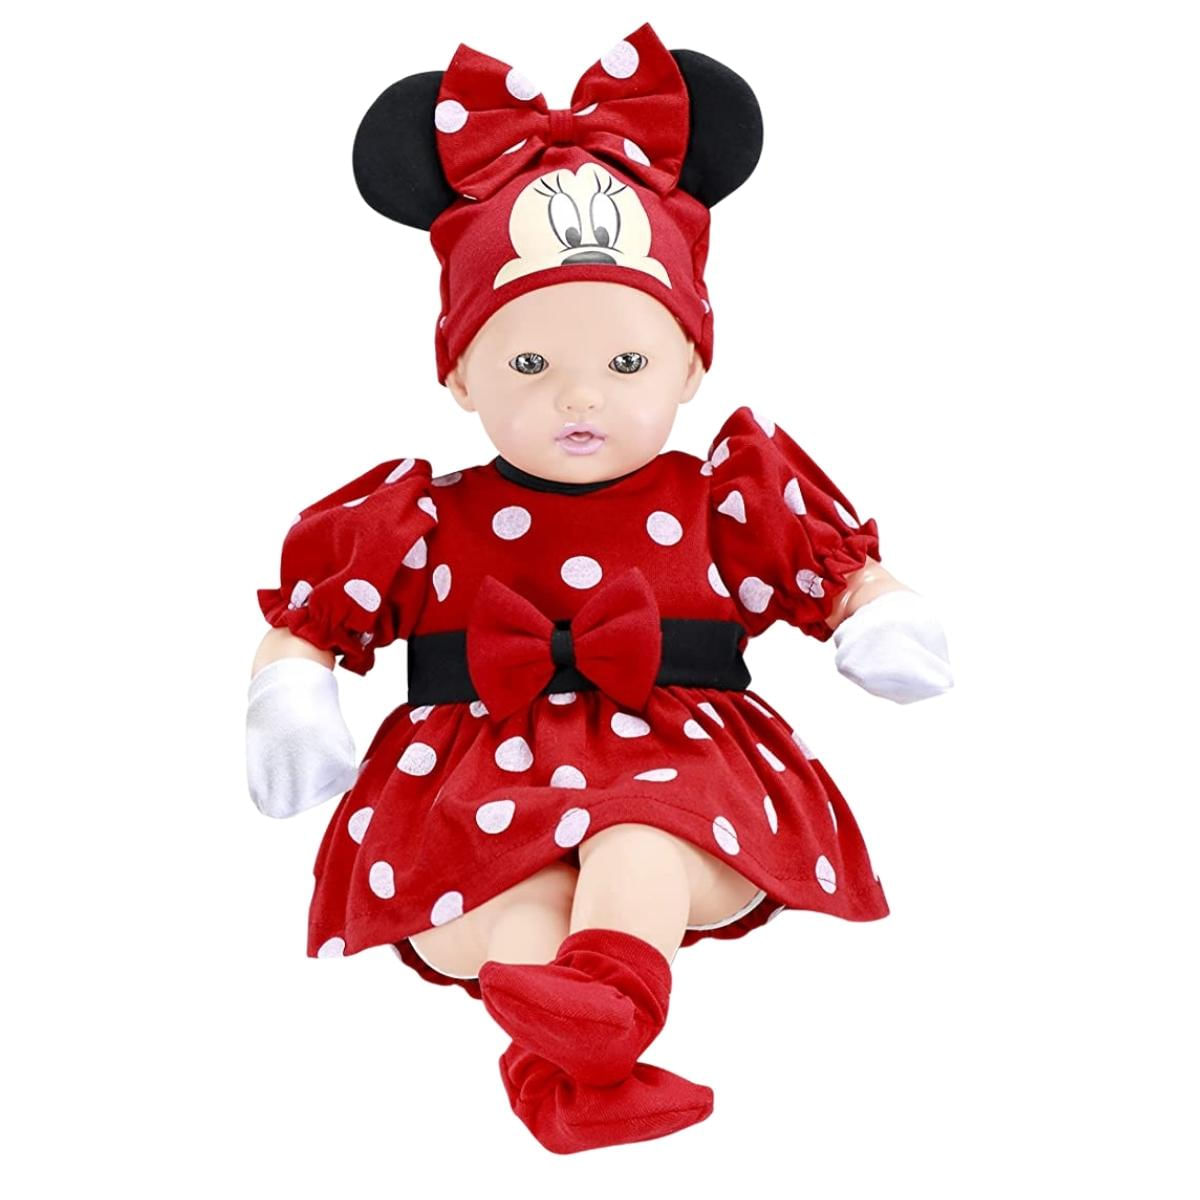 Boneca Classic Dolls Minnie Mouse - Roma